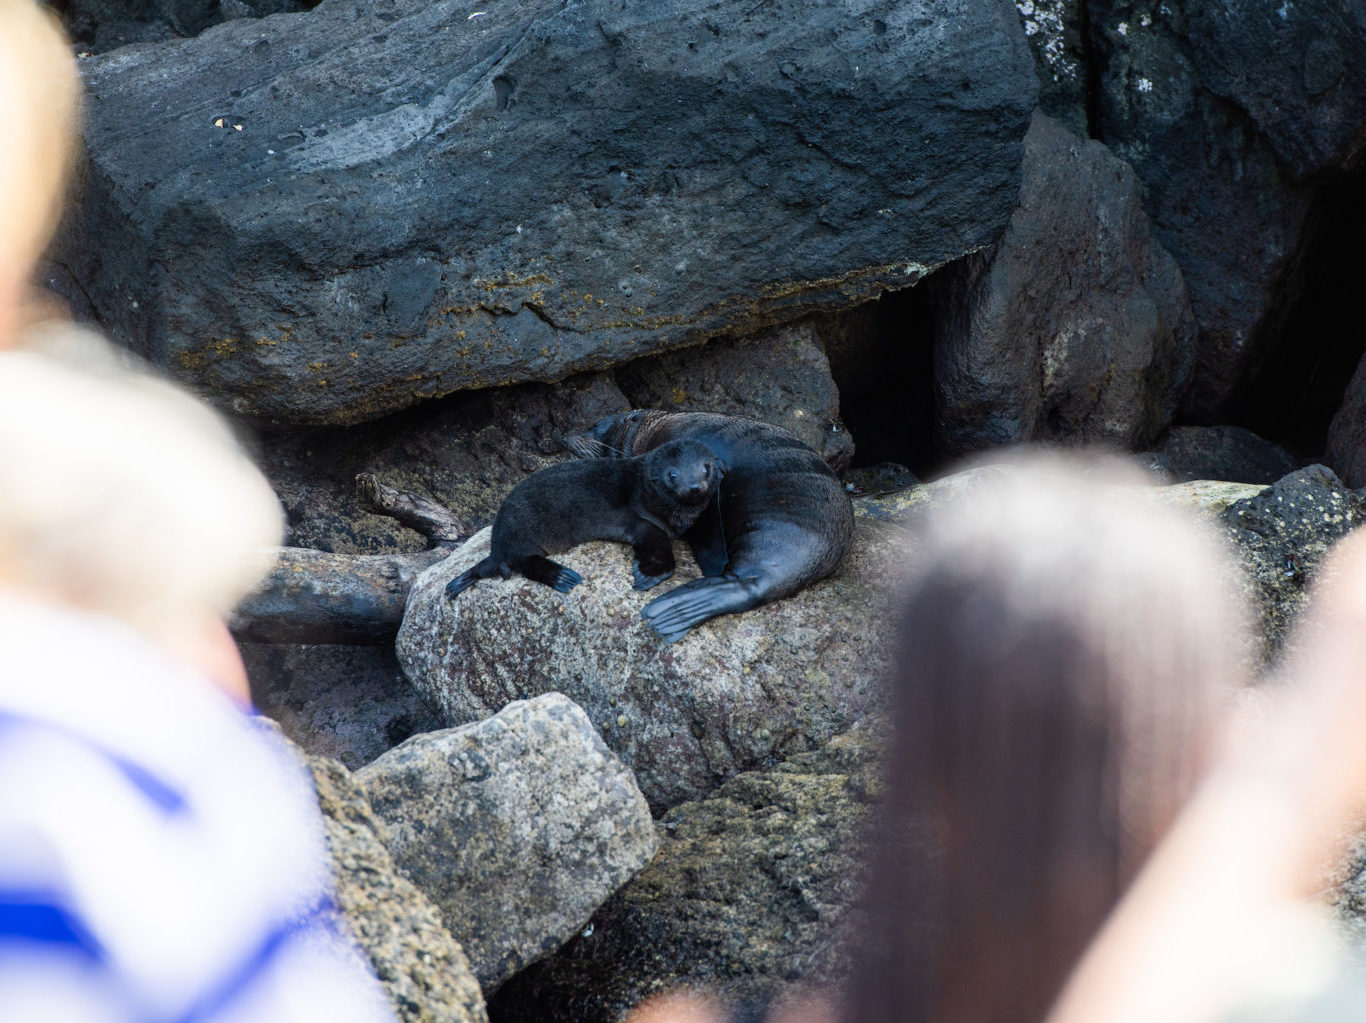 Fur seal on a rock